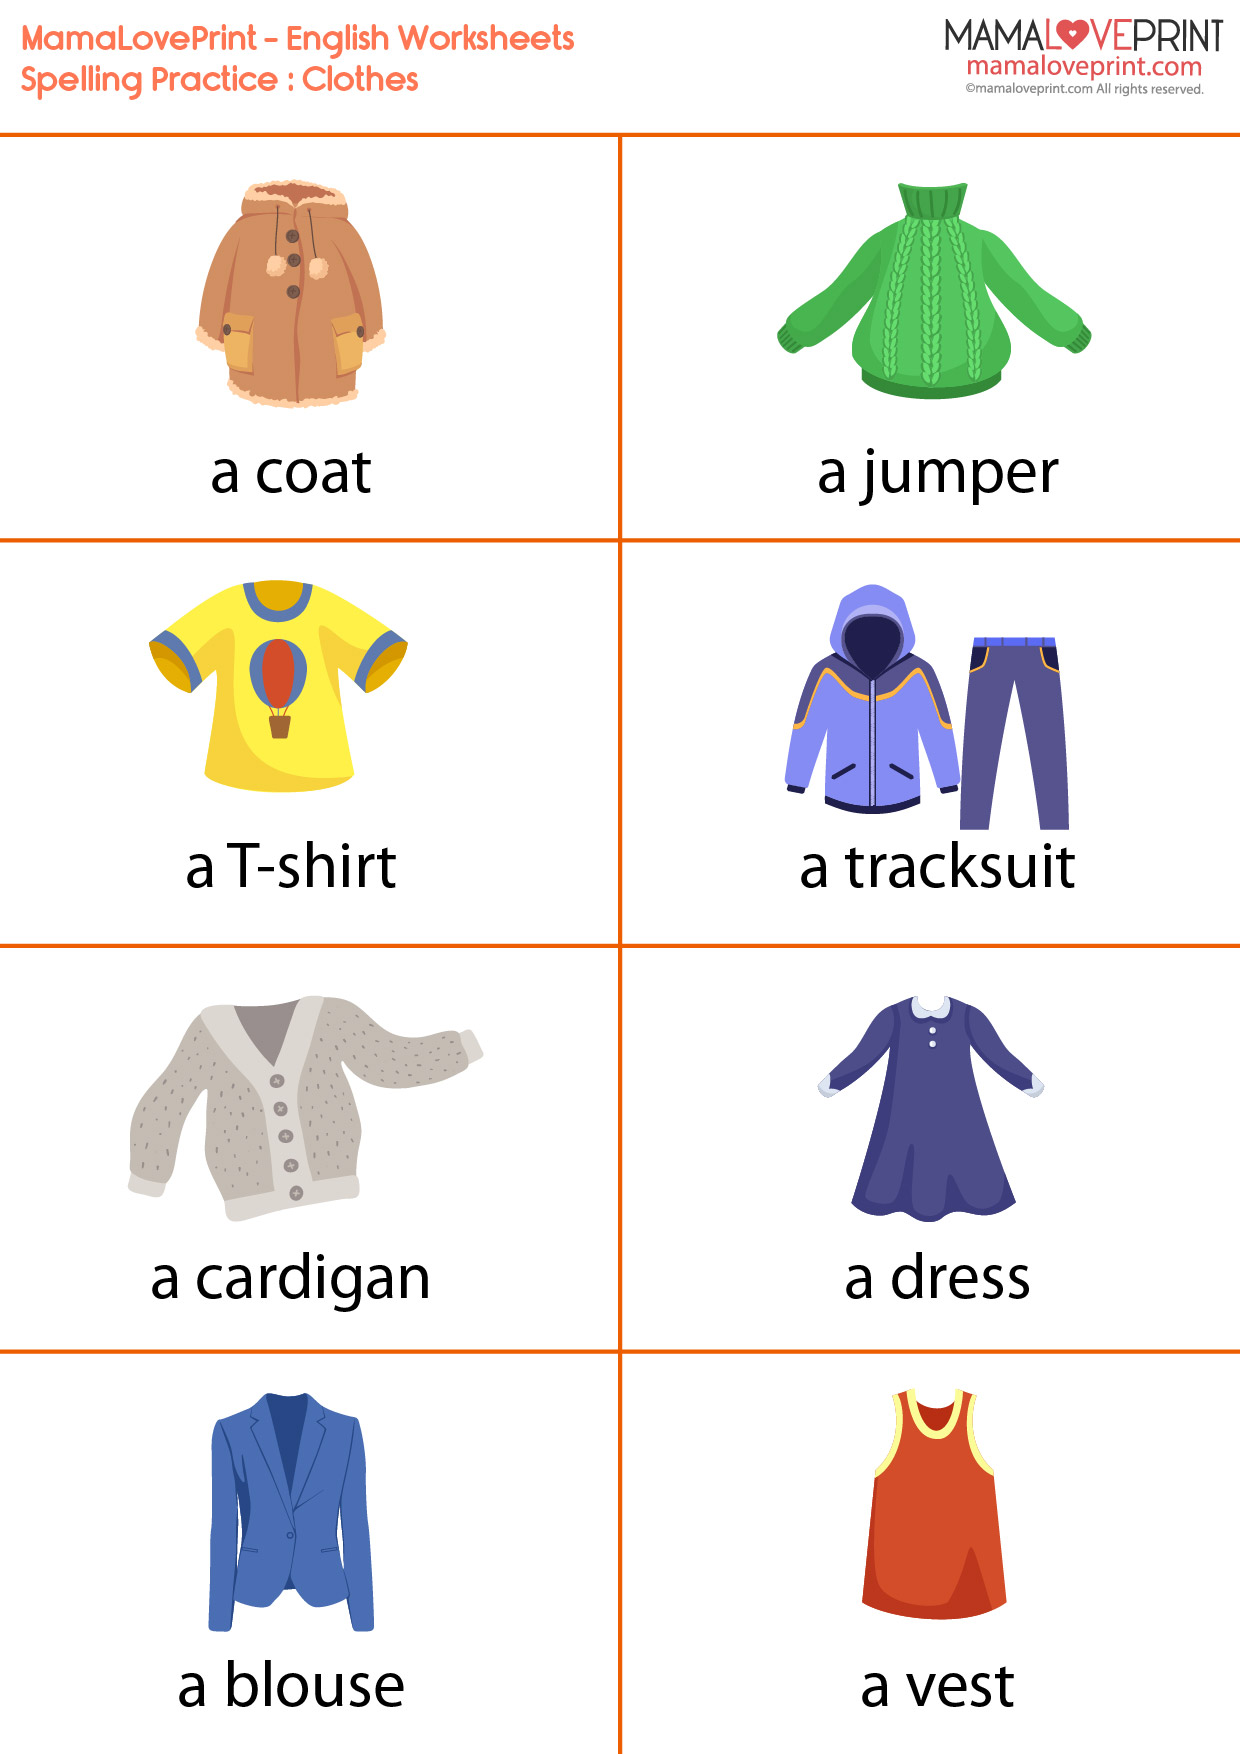 English Vocabulary for Clothing